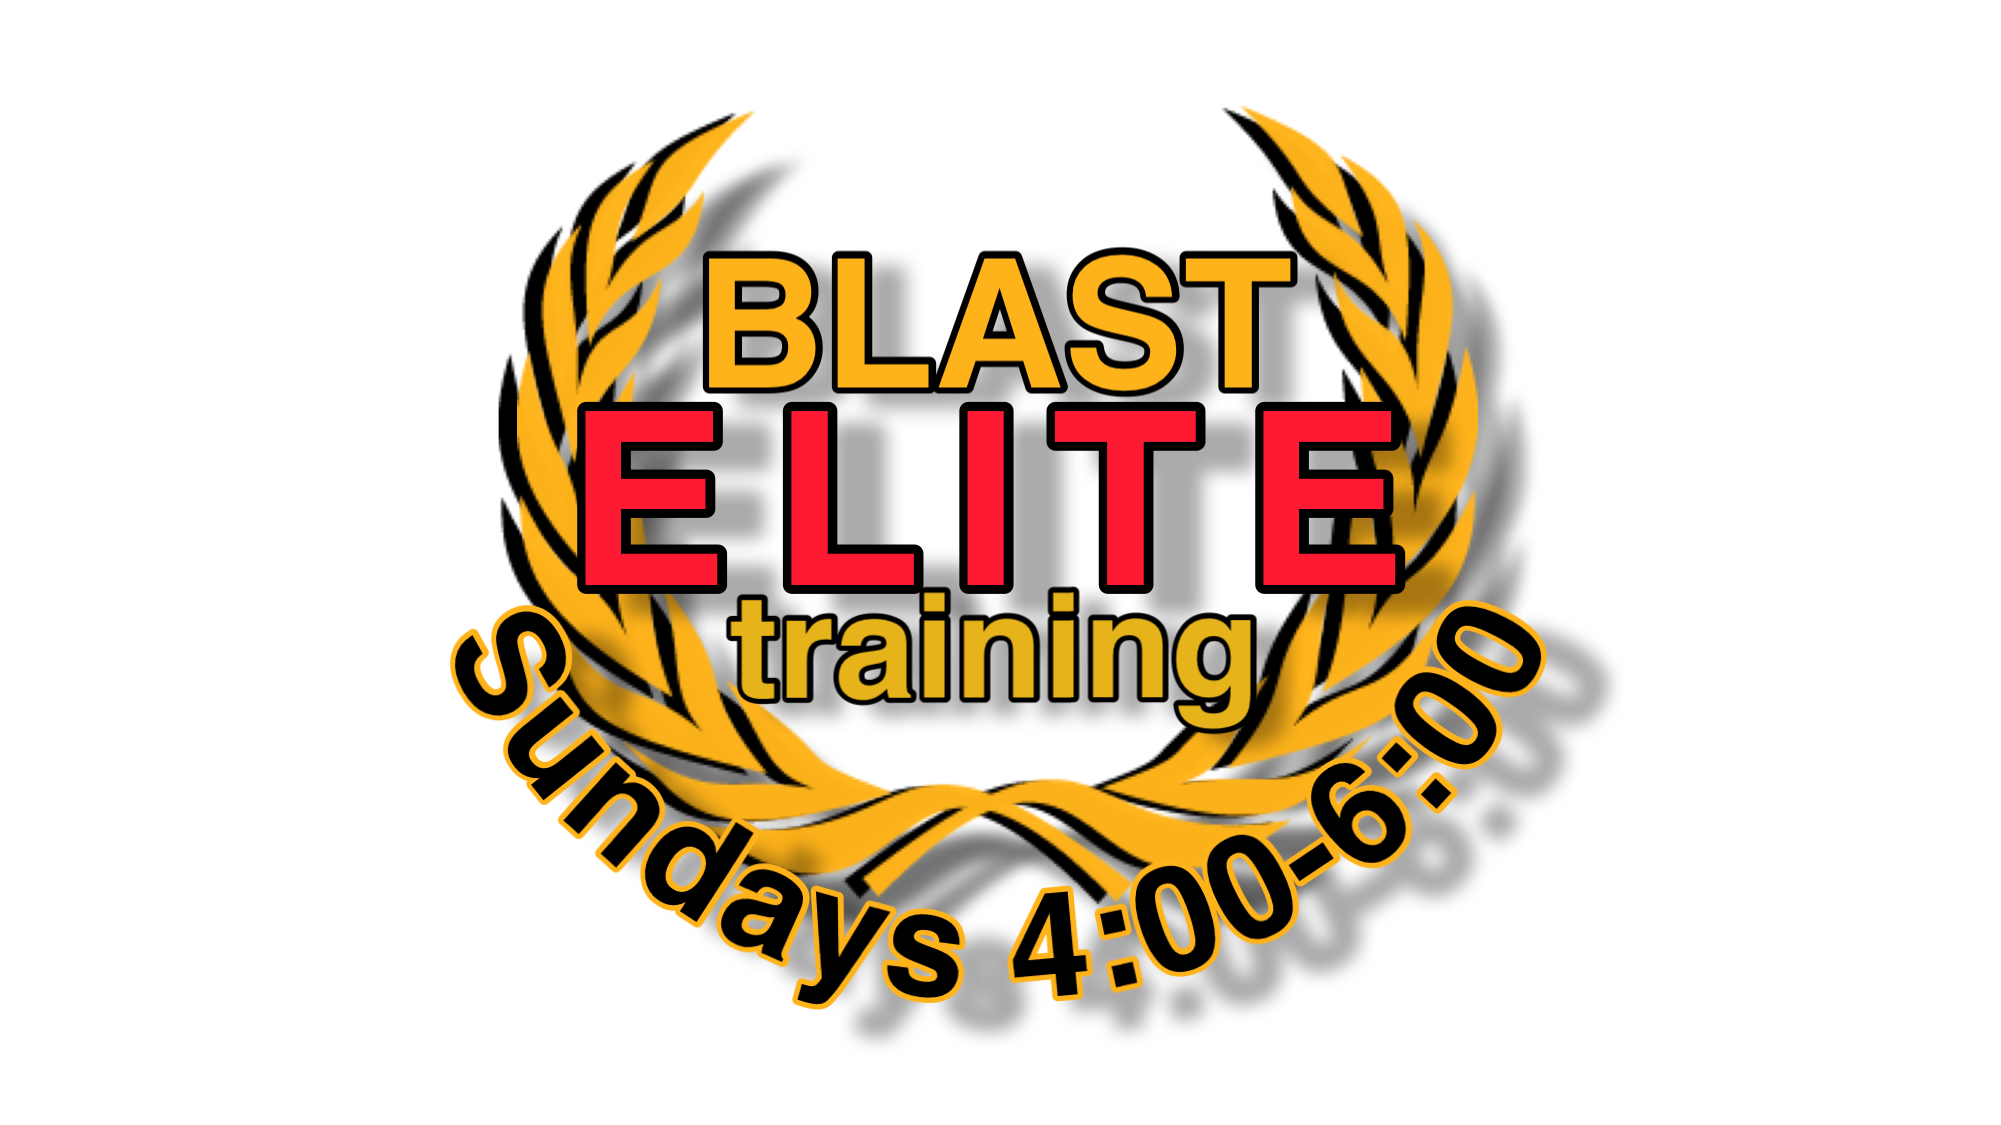 BLAST elite training logo